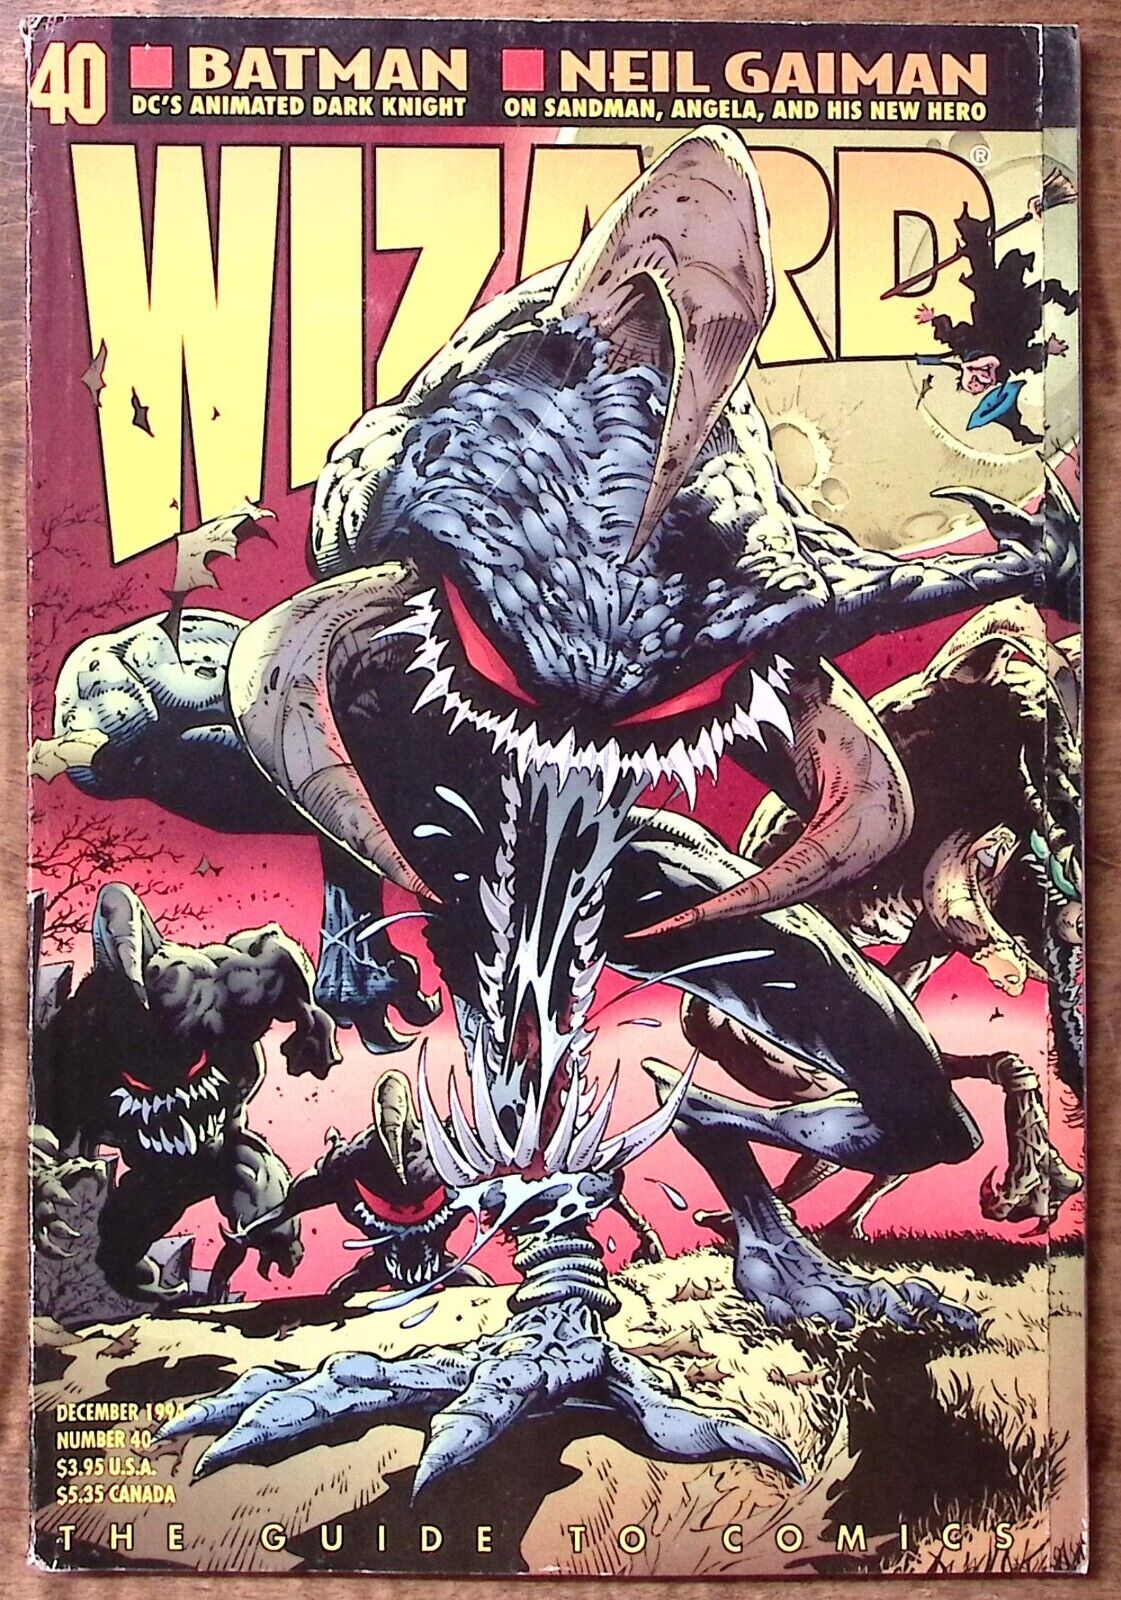 1994 WIZARD GUIDE TO COMICS #40 DEC BATMAN DARK KNIGHT NEIL GAIMAN Z5047